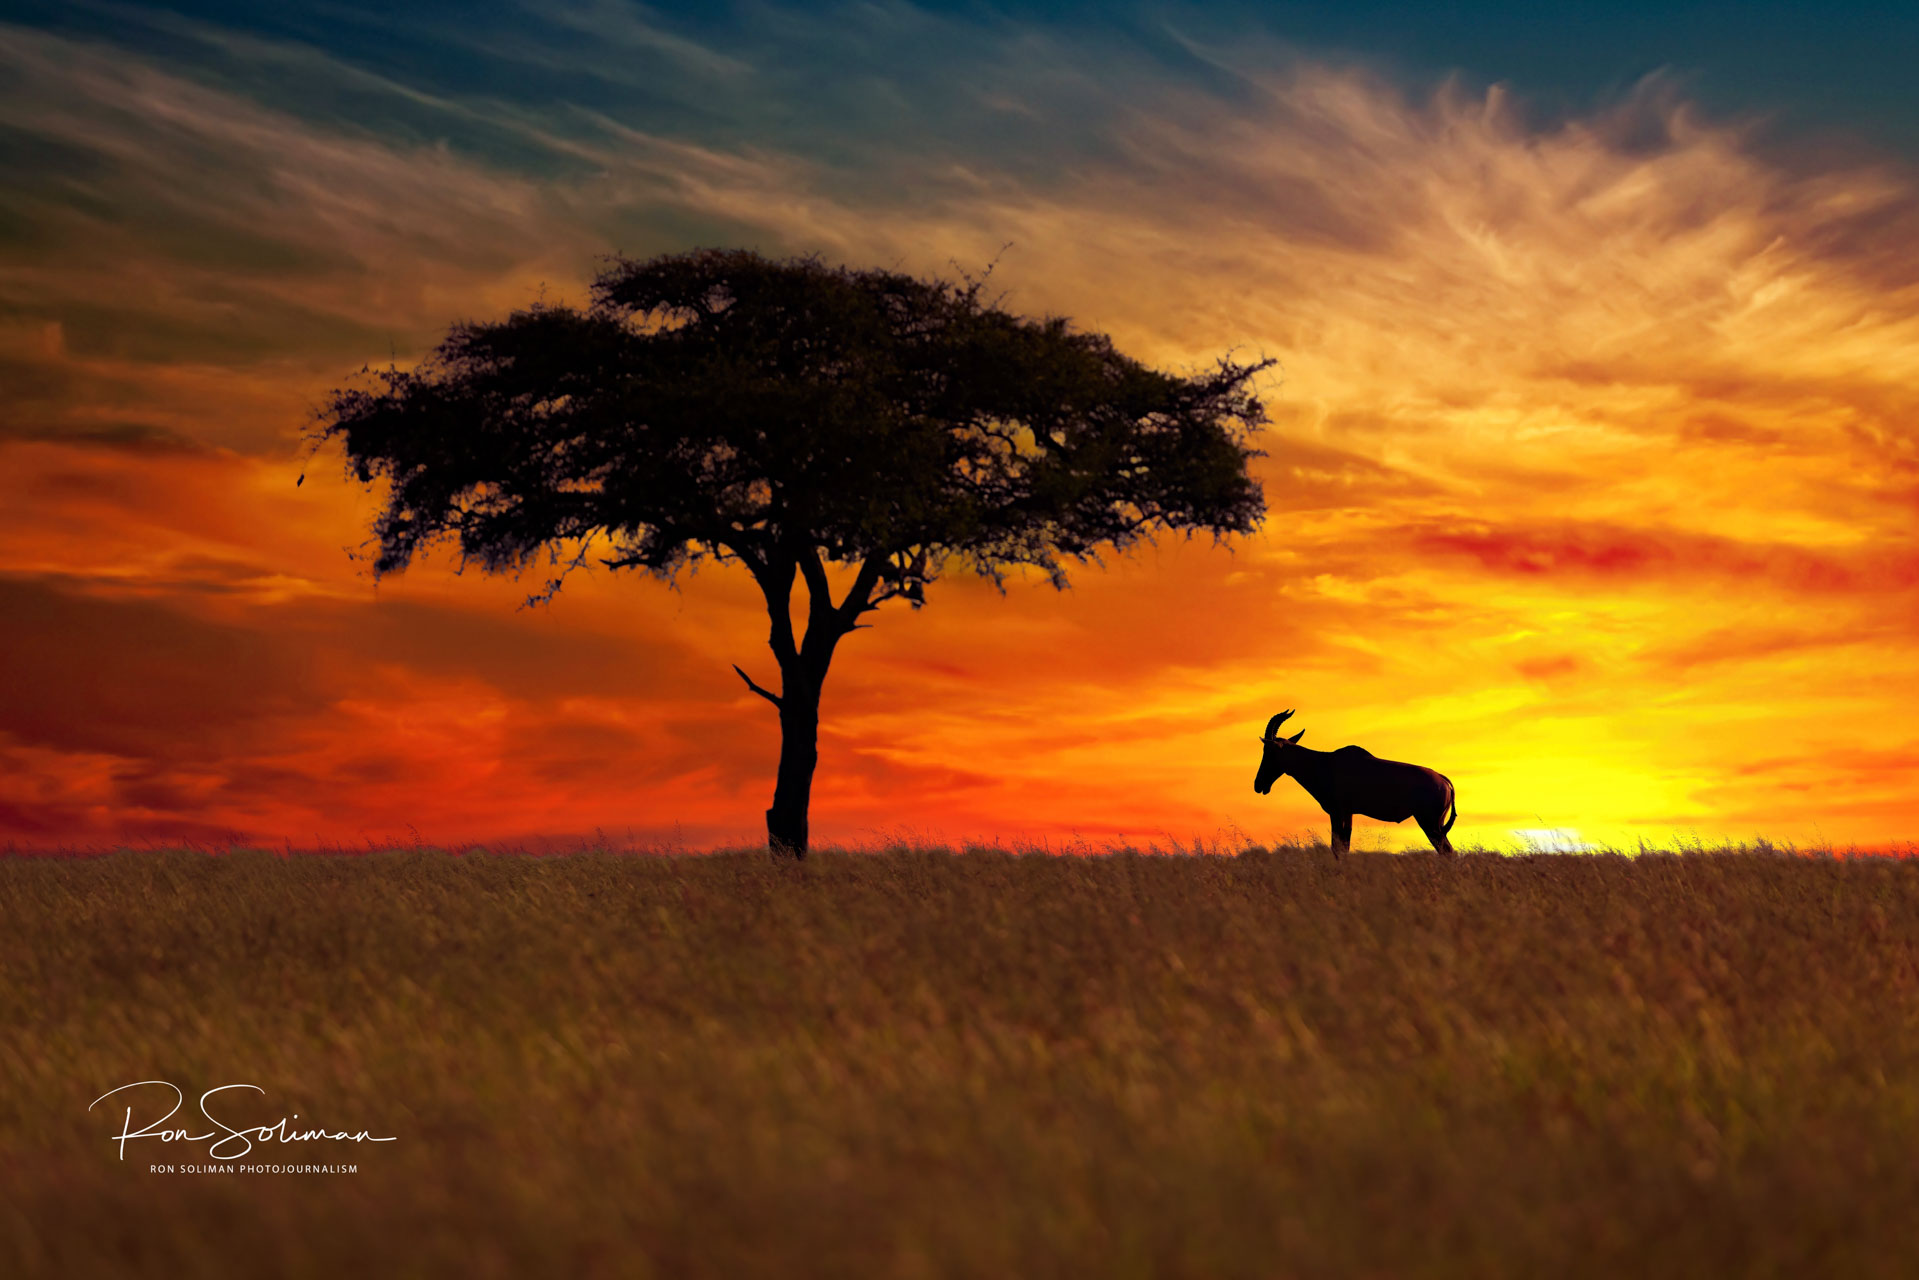 Tanzania sunset - Best Earth Day photos